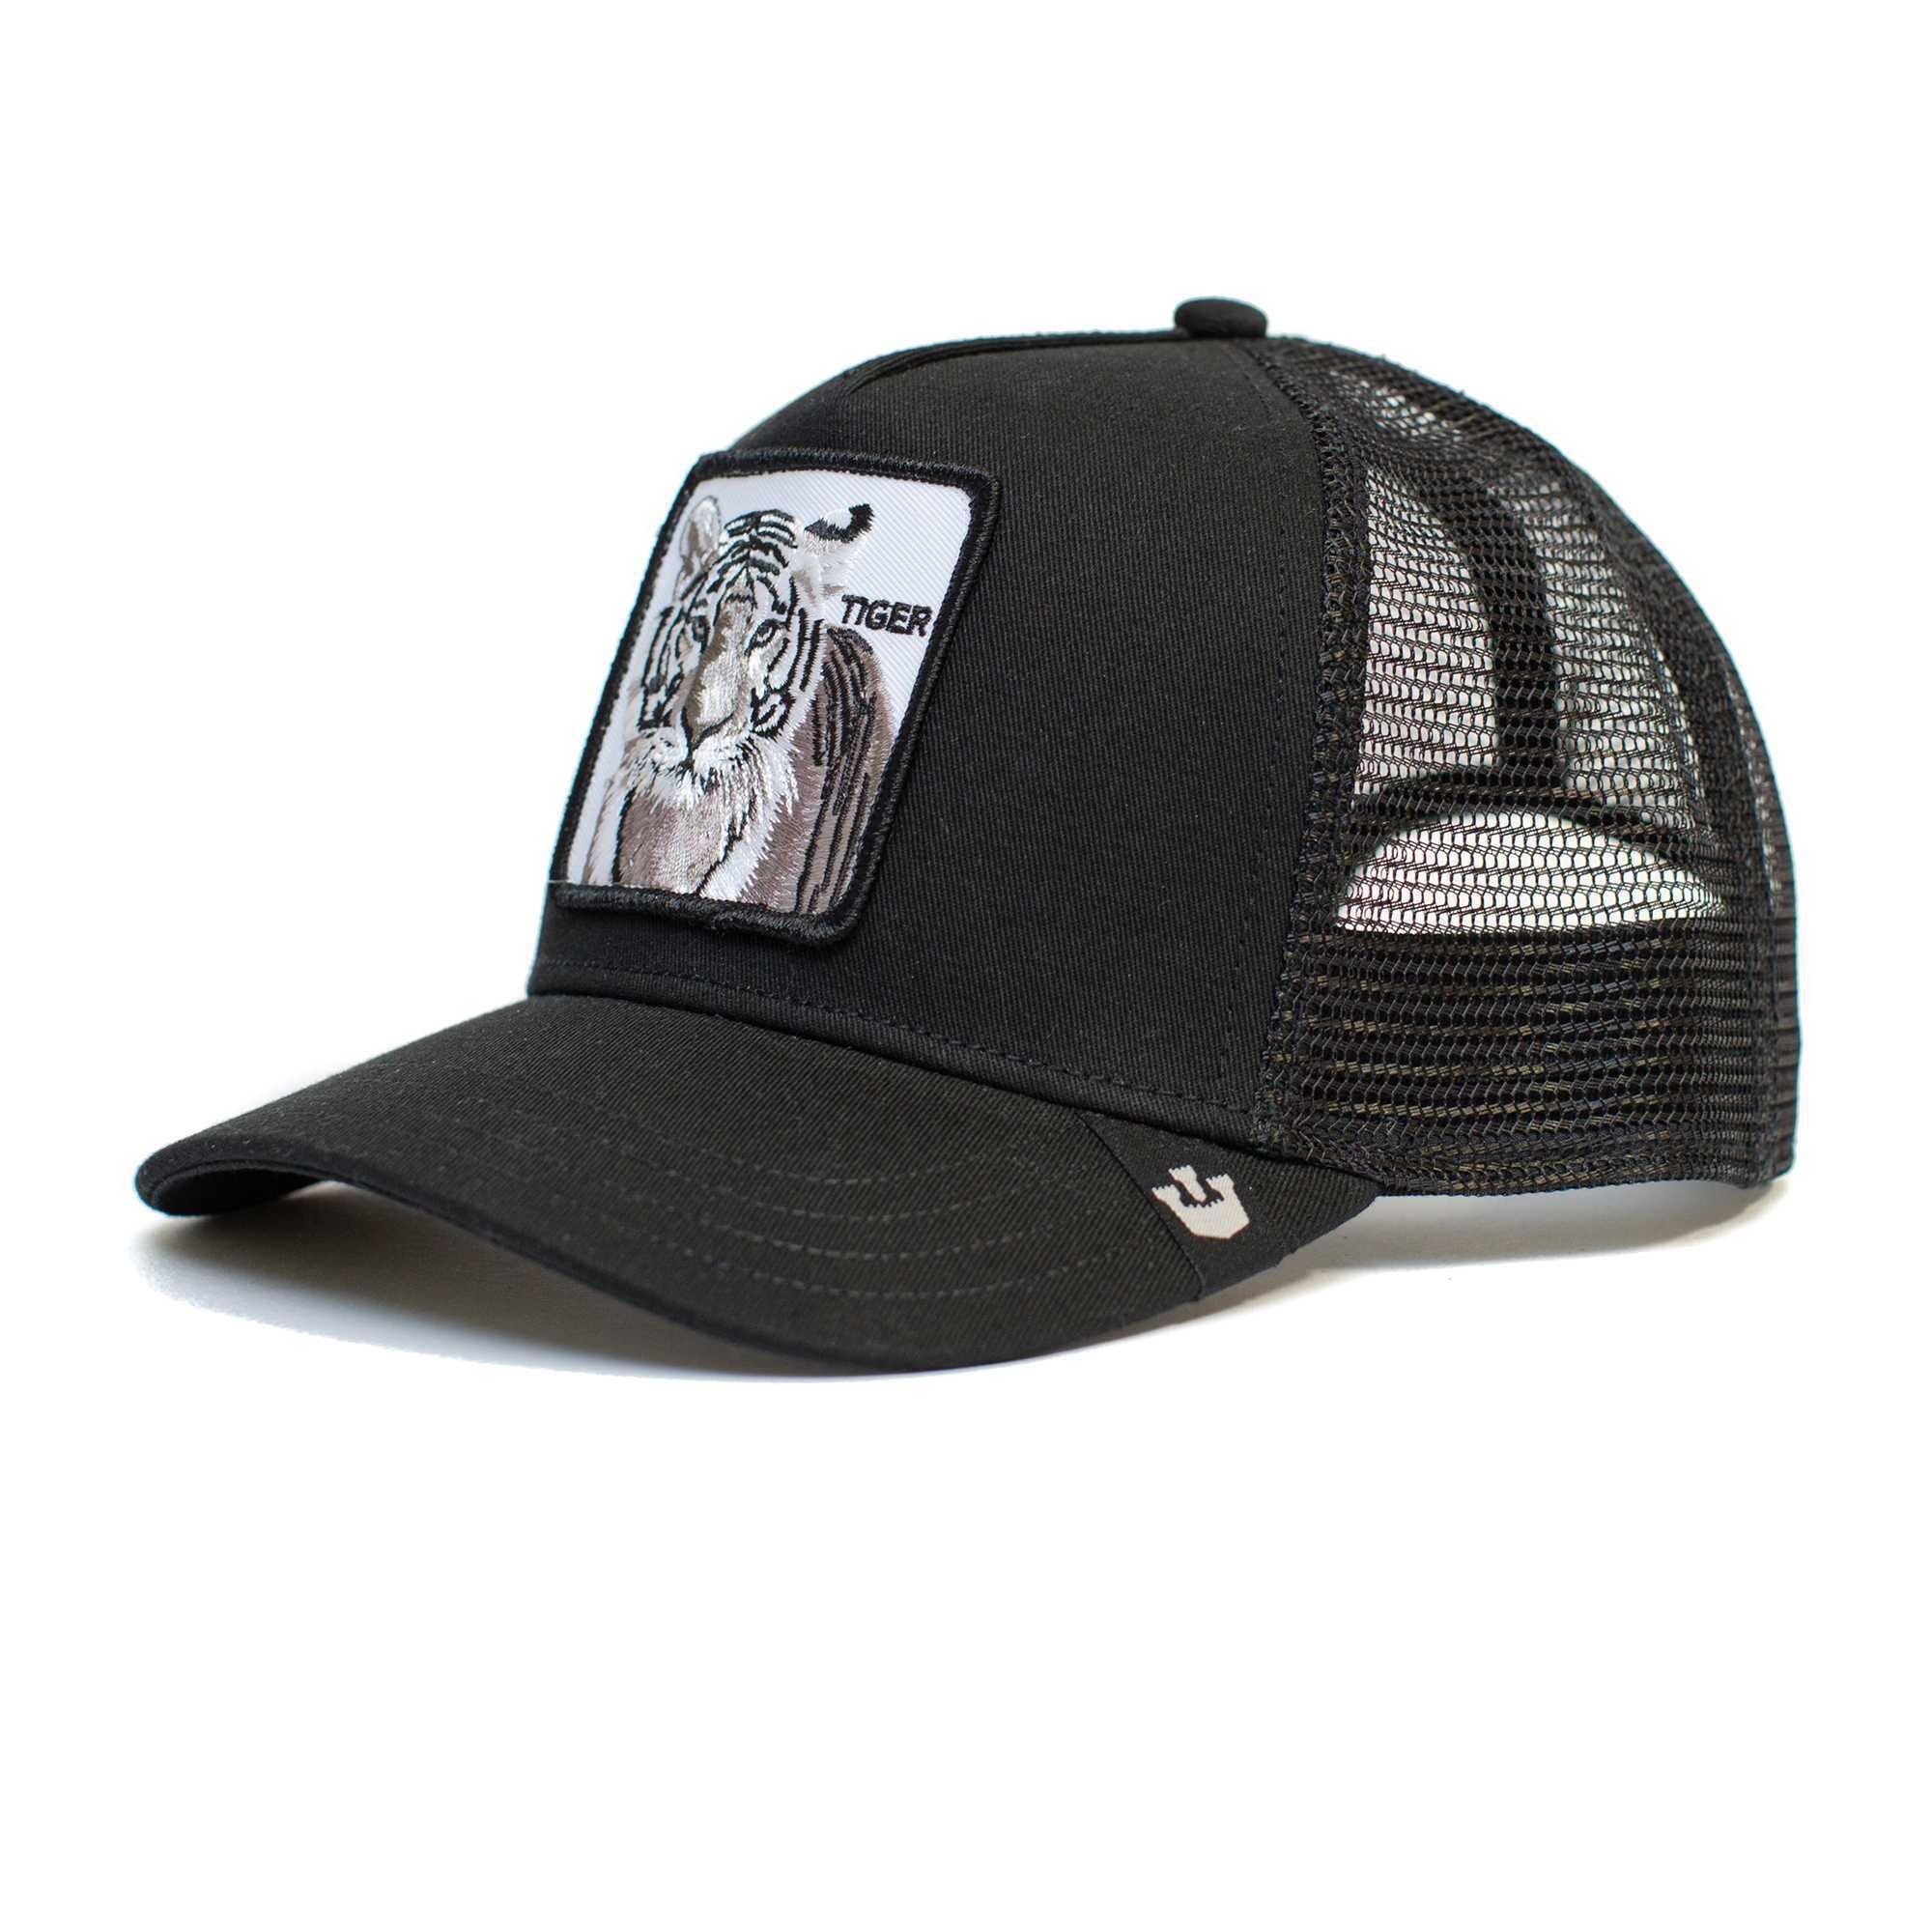 Size Tiger black Trucker Frontpatch, White Baseball Bros. Unisex GOORIN Cap Cap - Kappe, The One